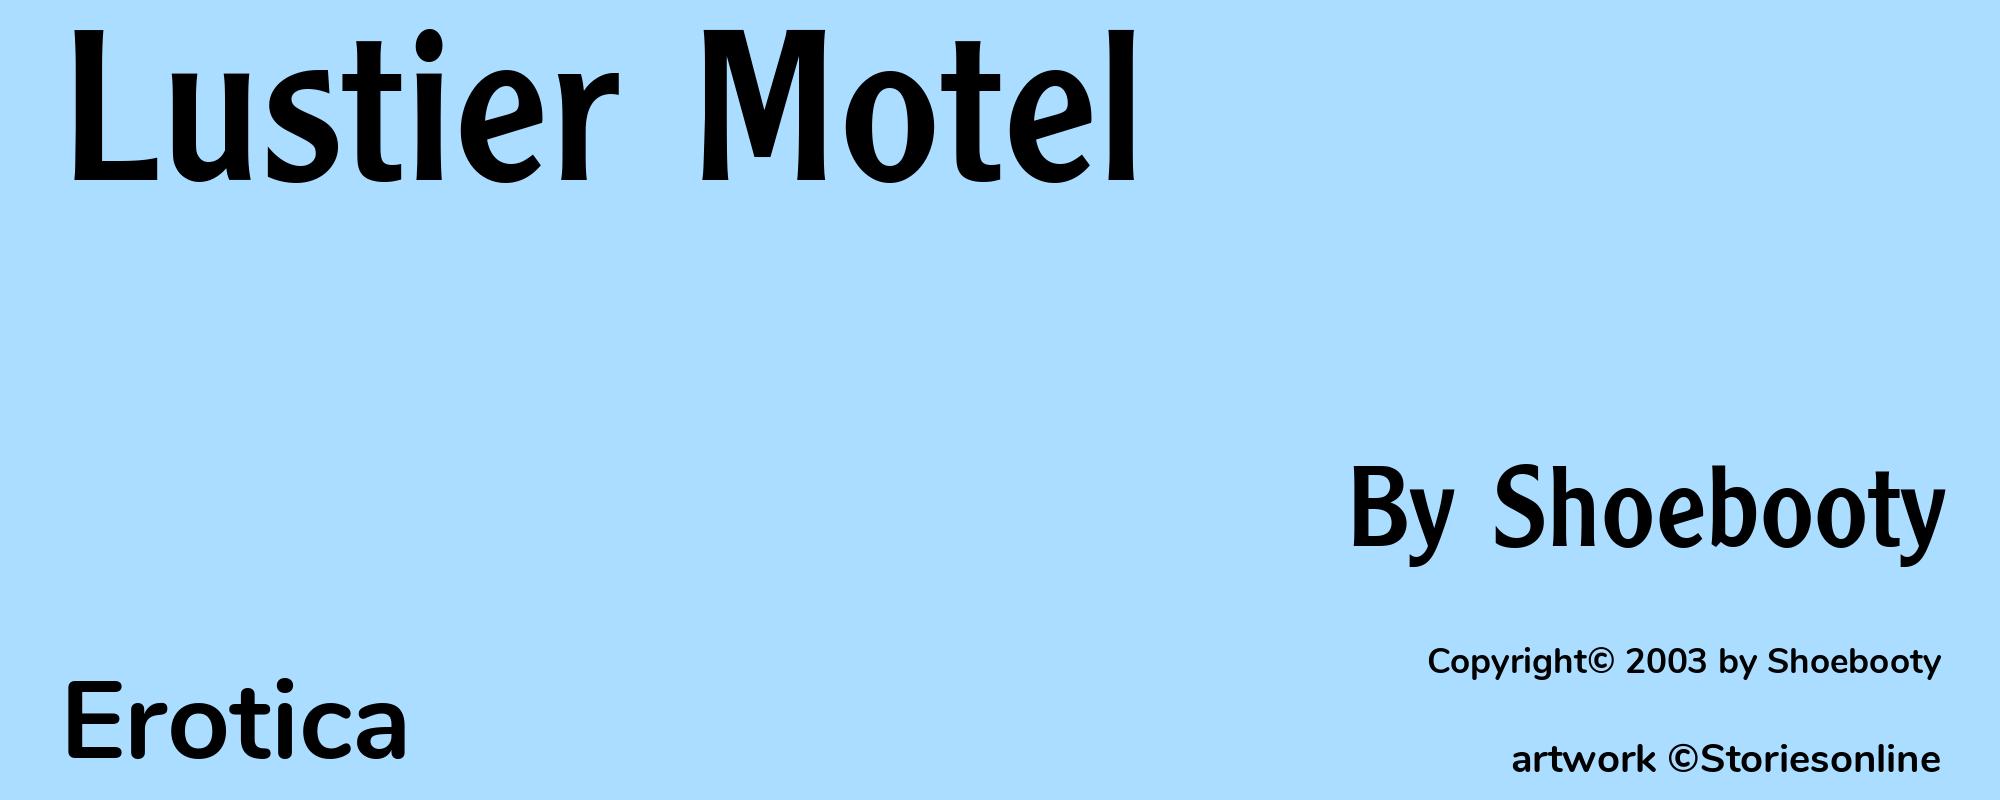 Lustier Motel - Cover